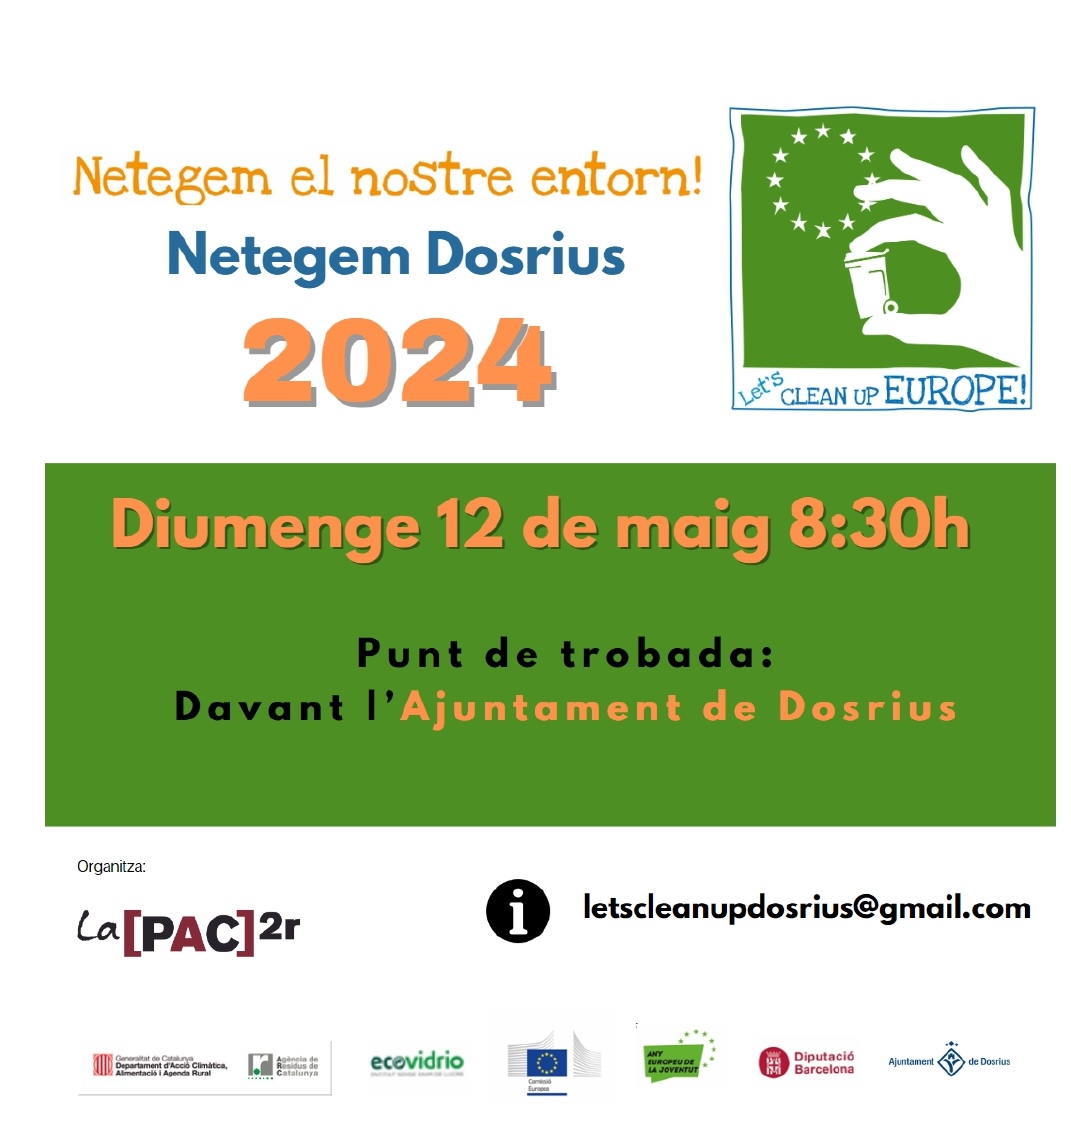 Demà diumenge, 12 de maig, netegem #Dosrius 🌿 📍Punt de trobada: davant l'Ajuntament  🕑 A les 8.30 h  📩 letscleanupdosrius@gmail.com